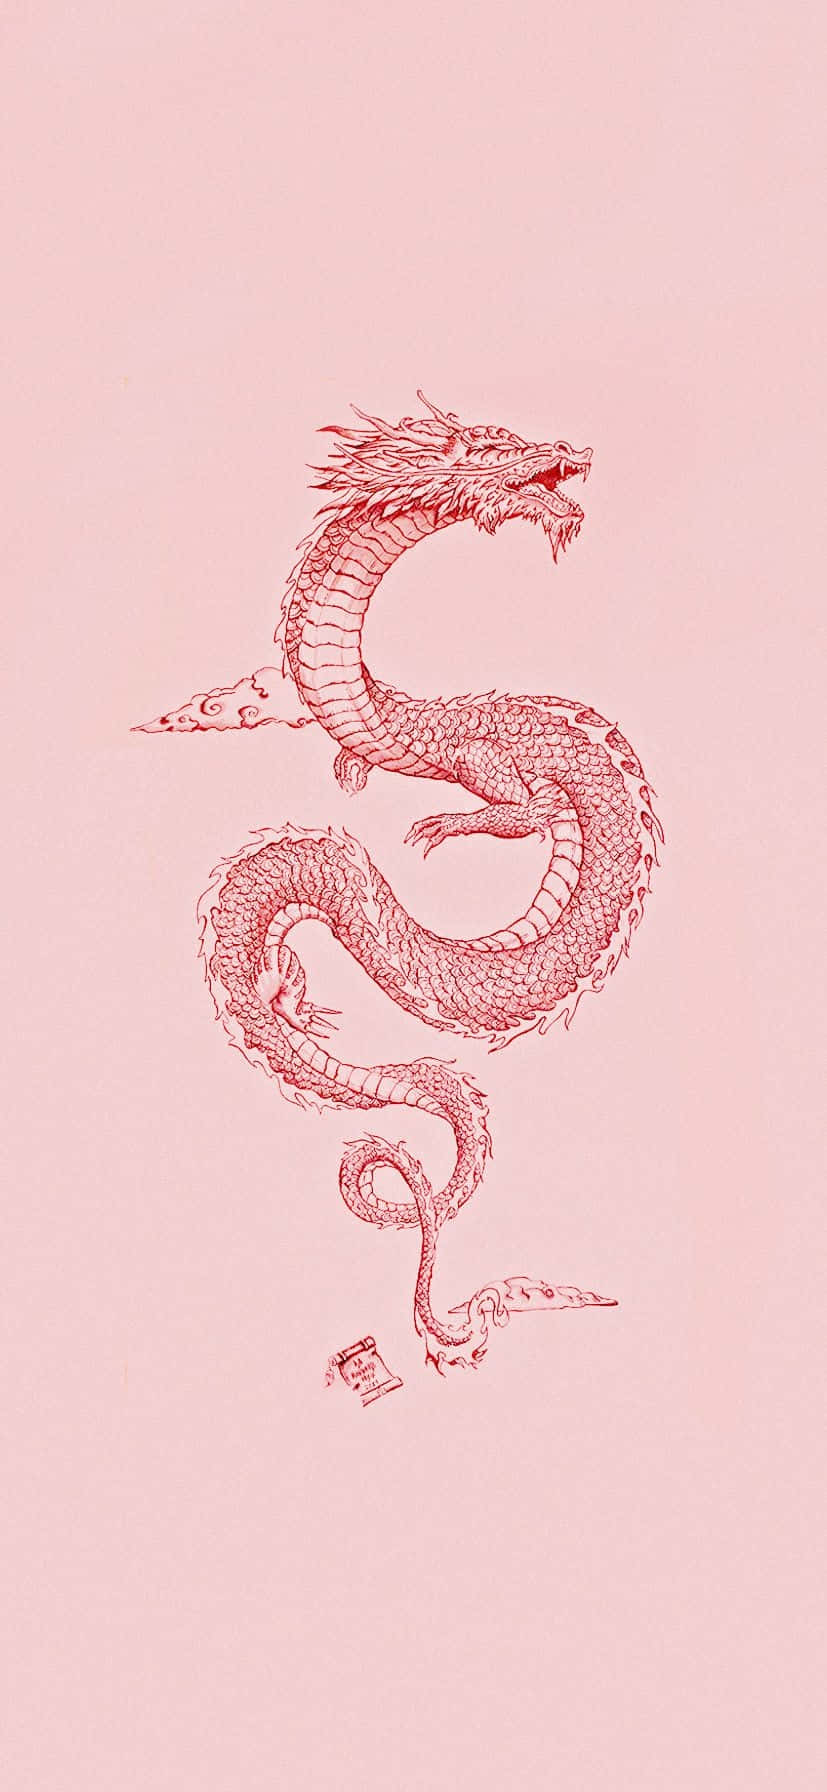 Red Dragon Illustration Pink Background.jpg Wallpaper